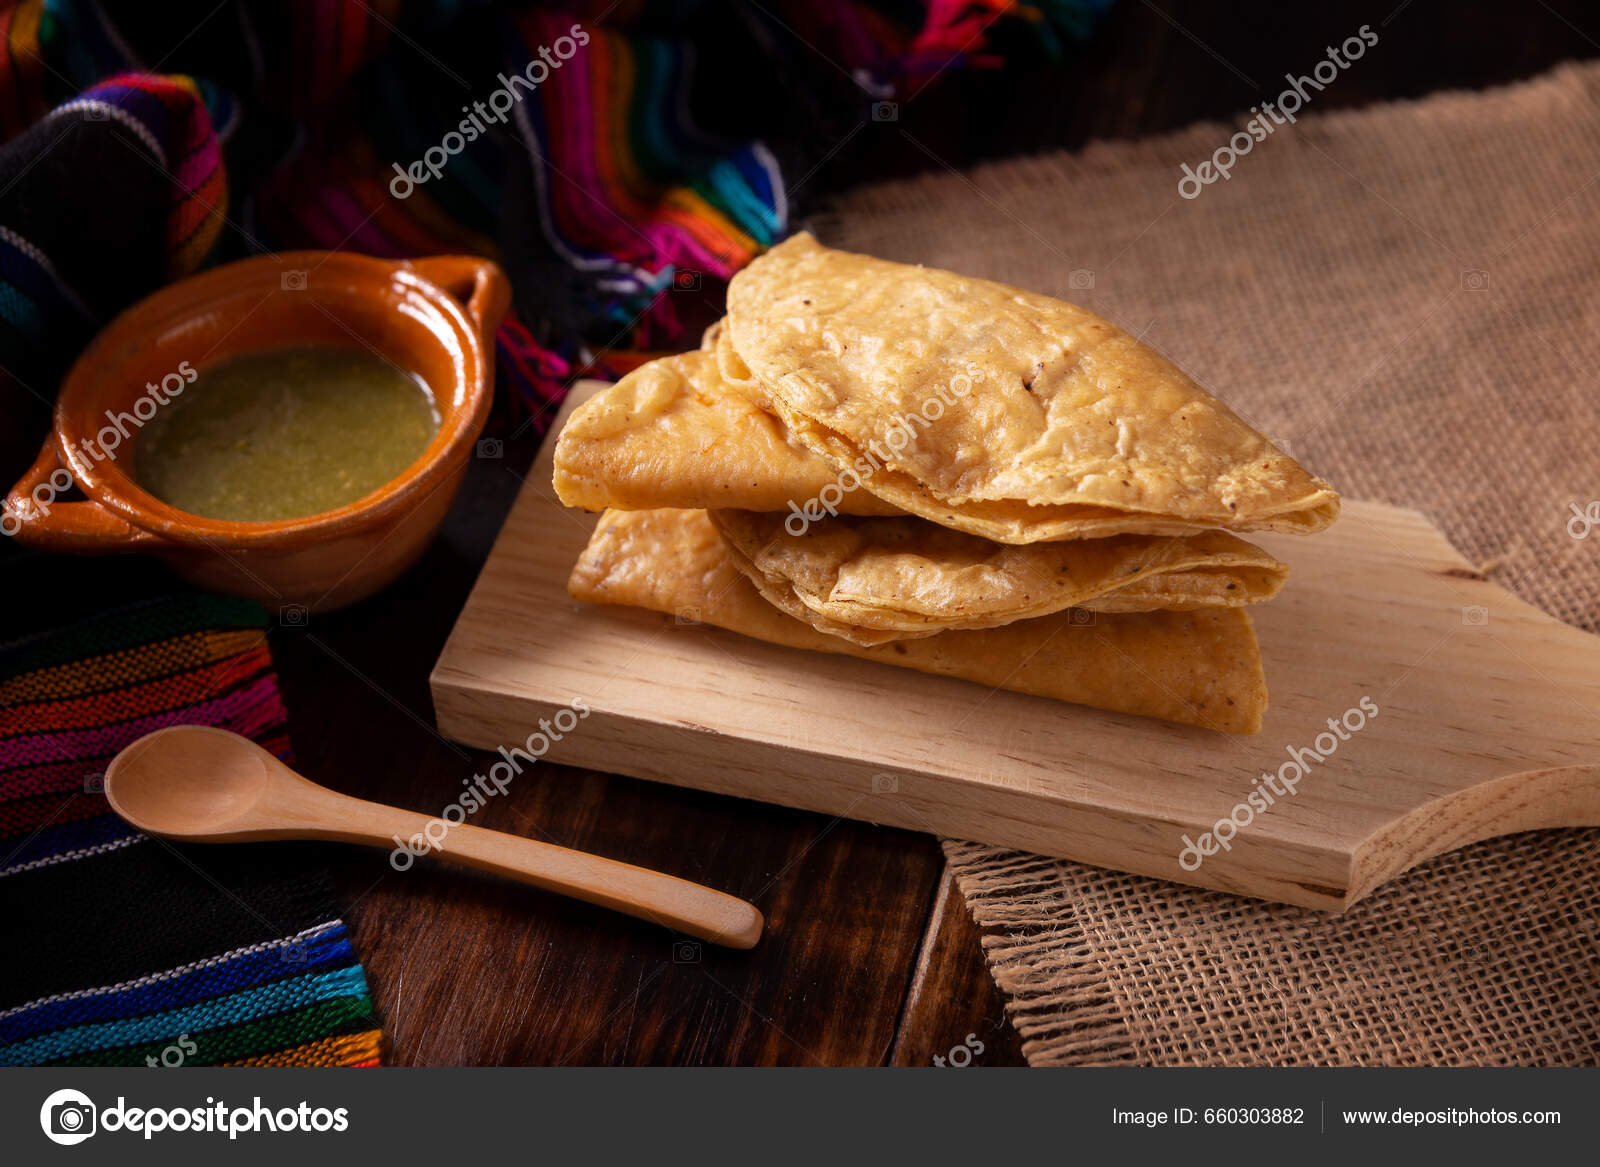 https://st5.depositphotos.com/1257517/66030/i/1600/depositphotos_660303882-stock-photo-golden-quesadillas-fried-quesadillas-made.jpg